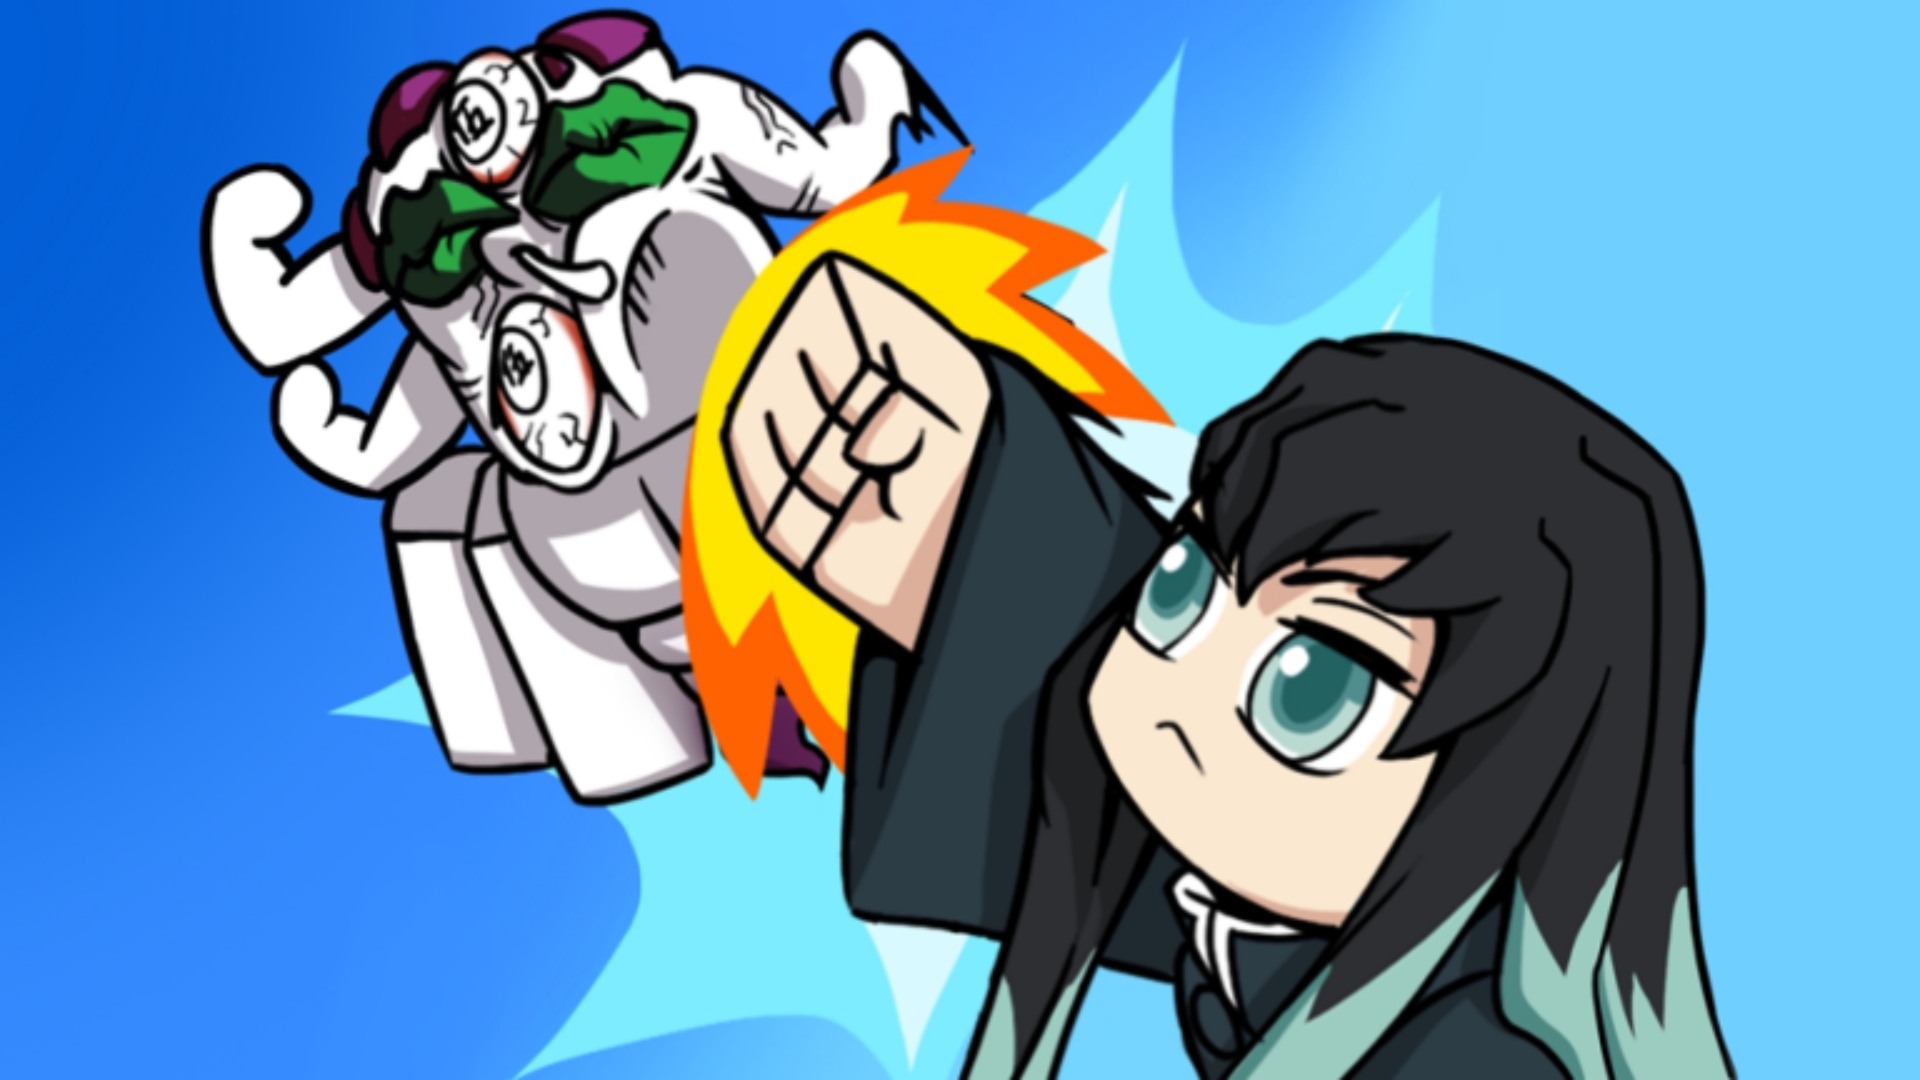 Anime Fight Stomach Punch GIF | GIFDB.com